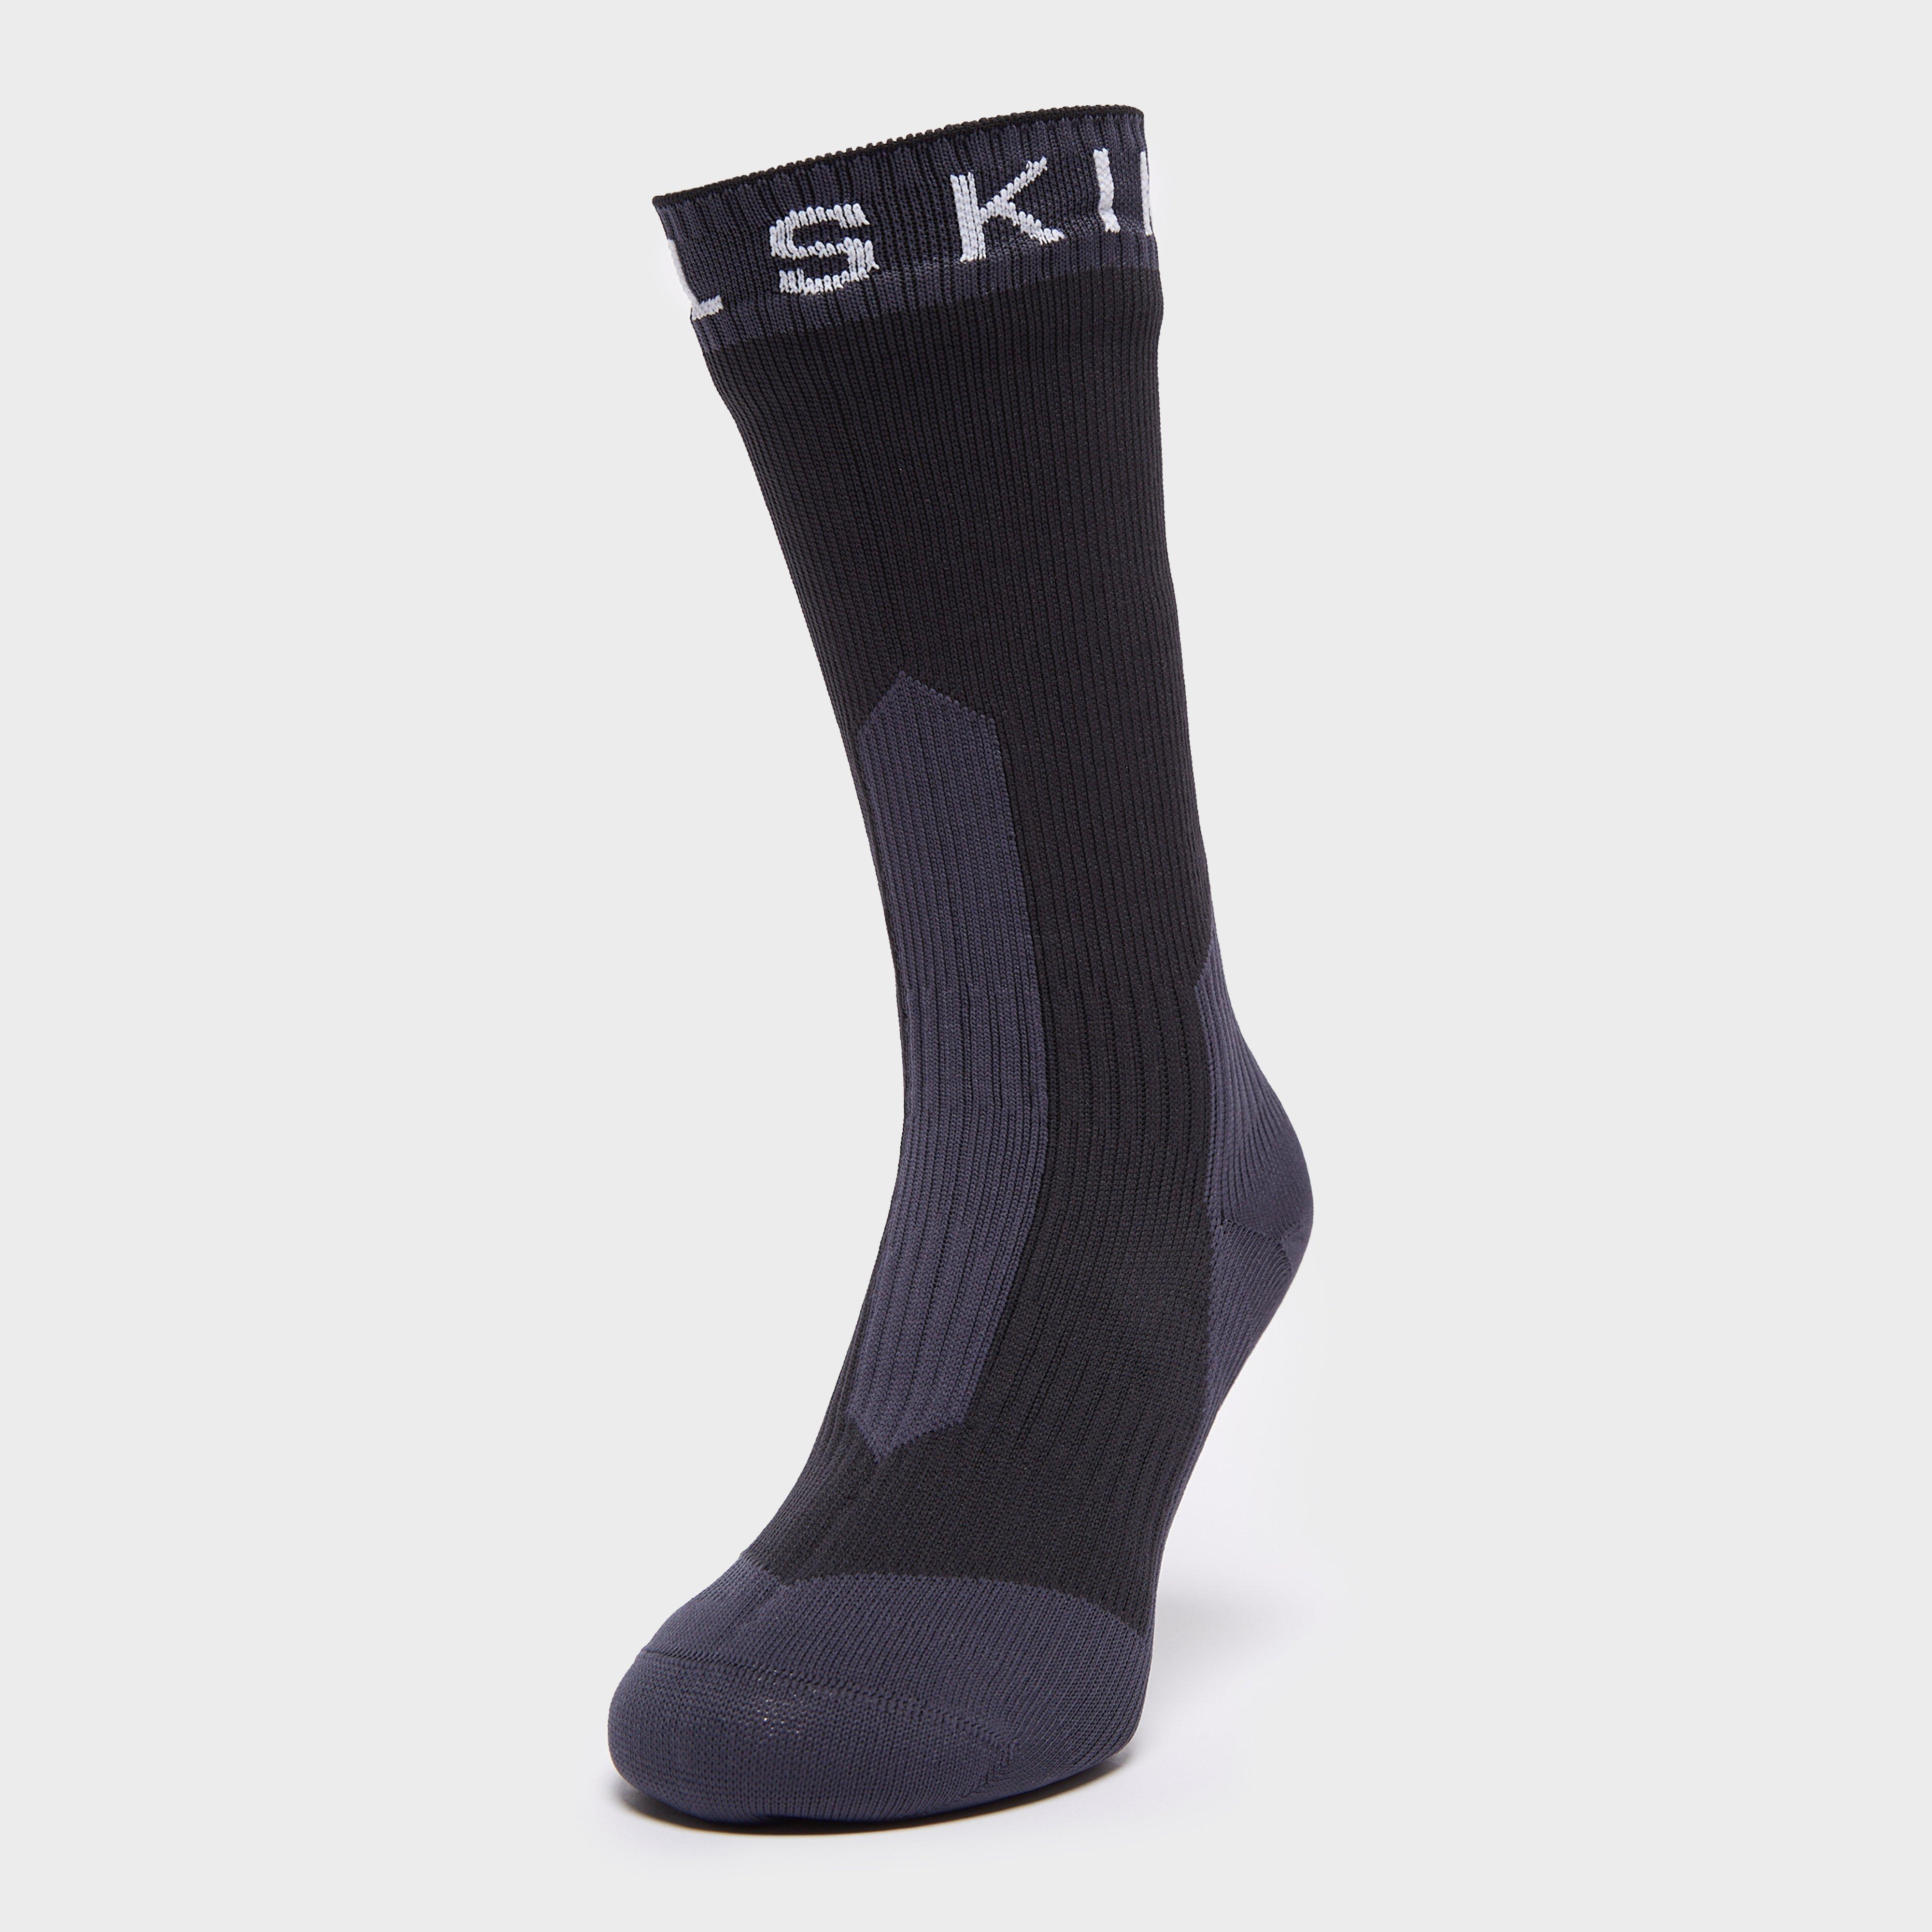 SealSkinz Sealskinz Extreme Cold Weather Waterproof Mid Length Sock - Grey, Grey